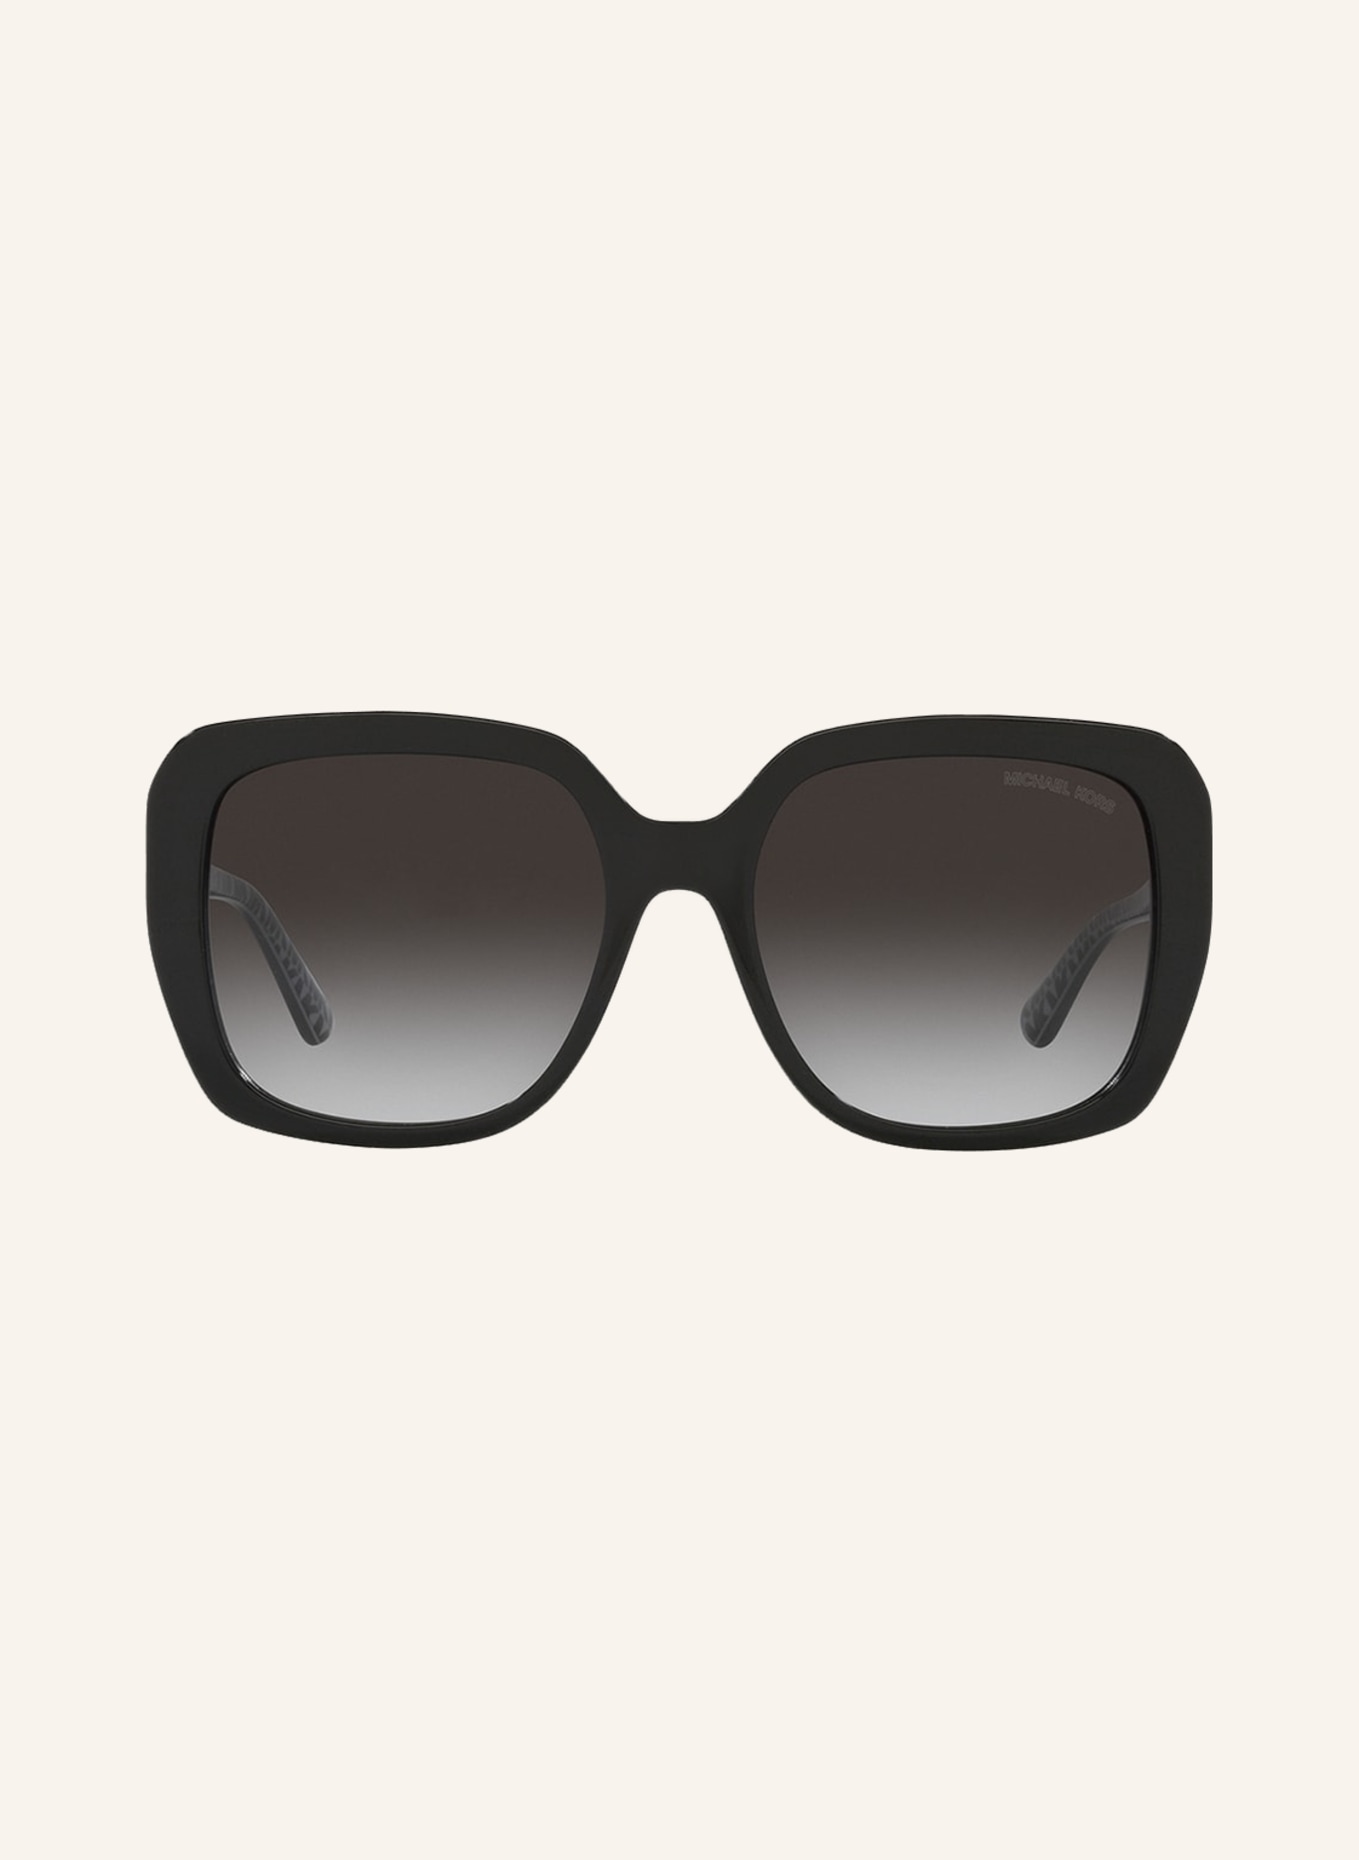 MICHAEL KORS Sunglasses MK-2140 MANHASSET, Color: 30058G - BLACK/GRAY GRADIENT (Image 2)